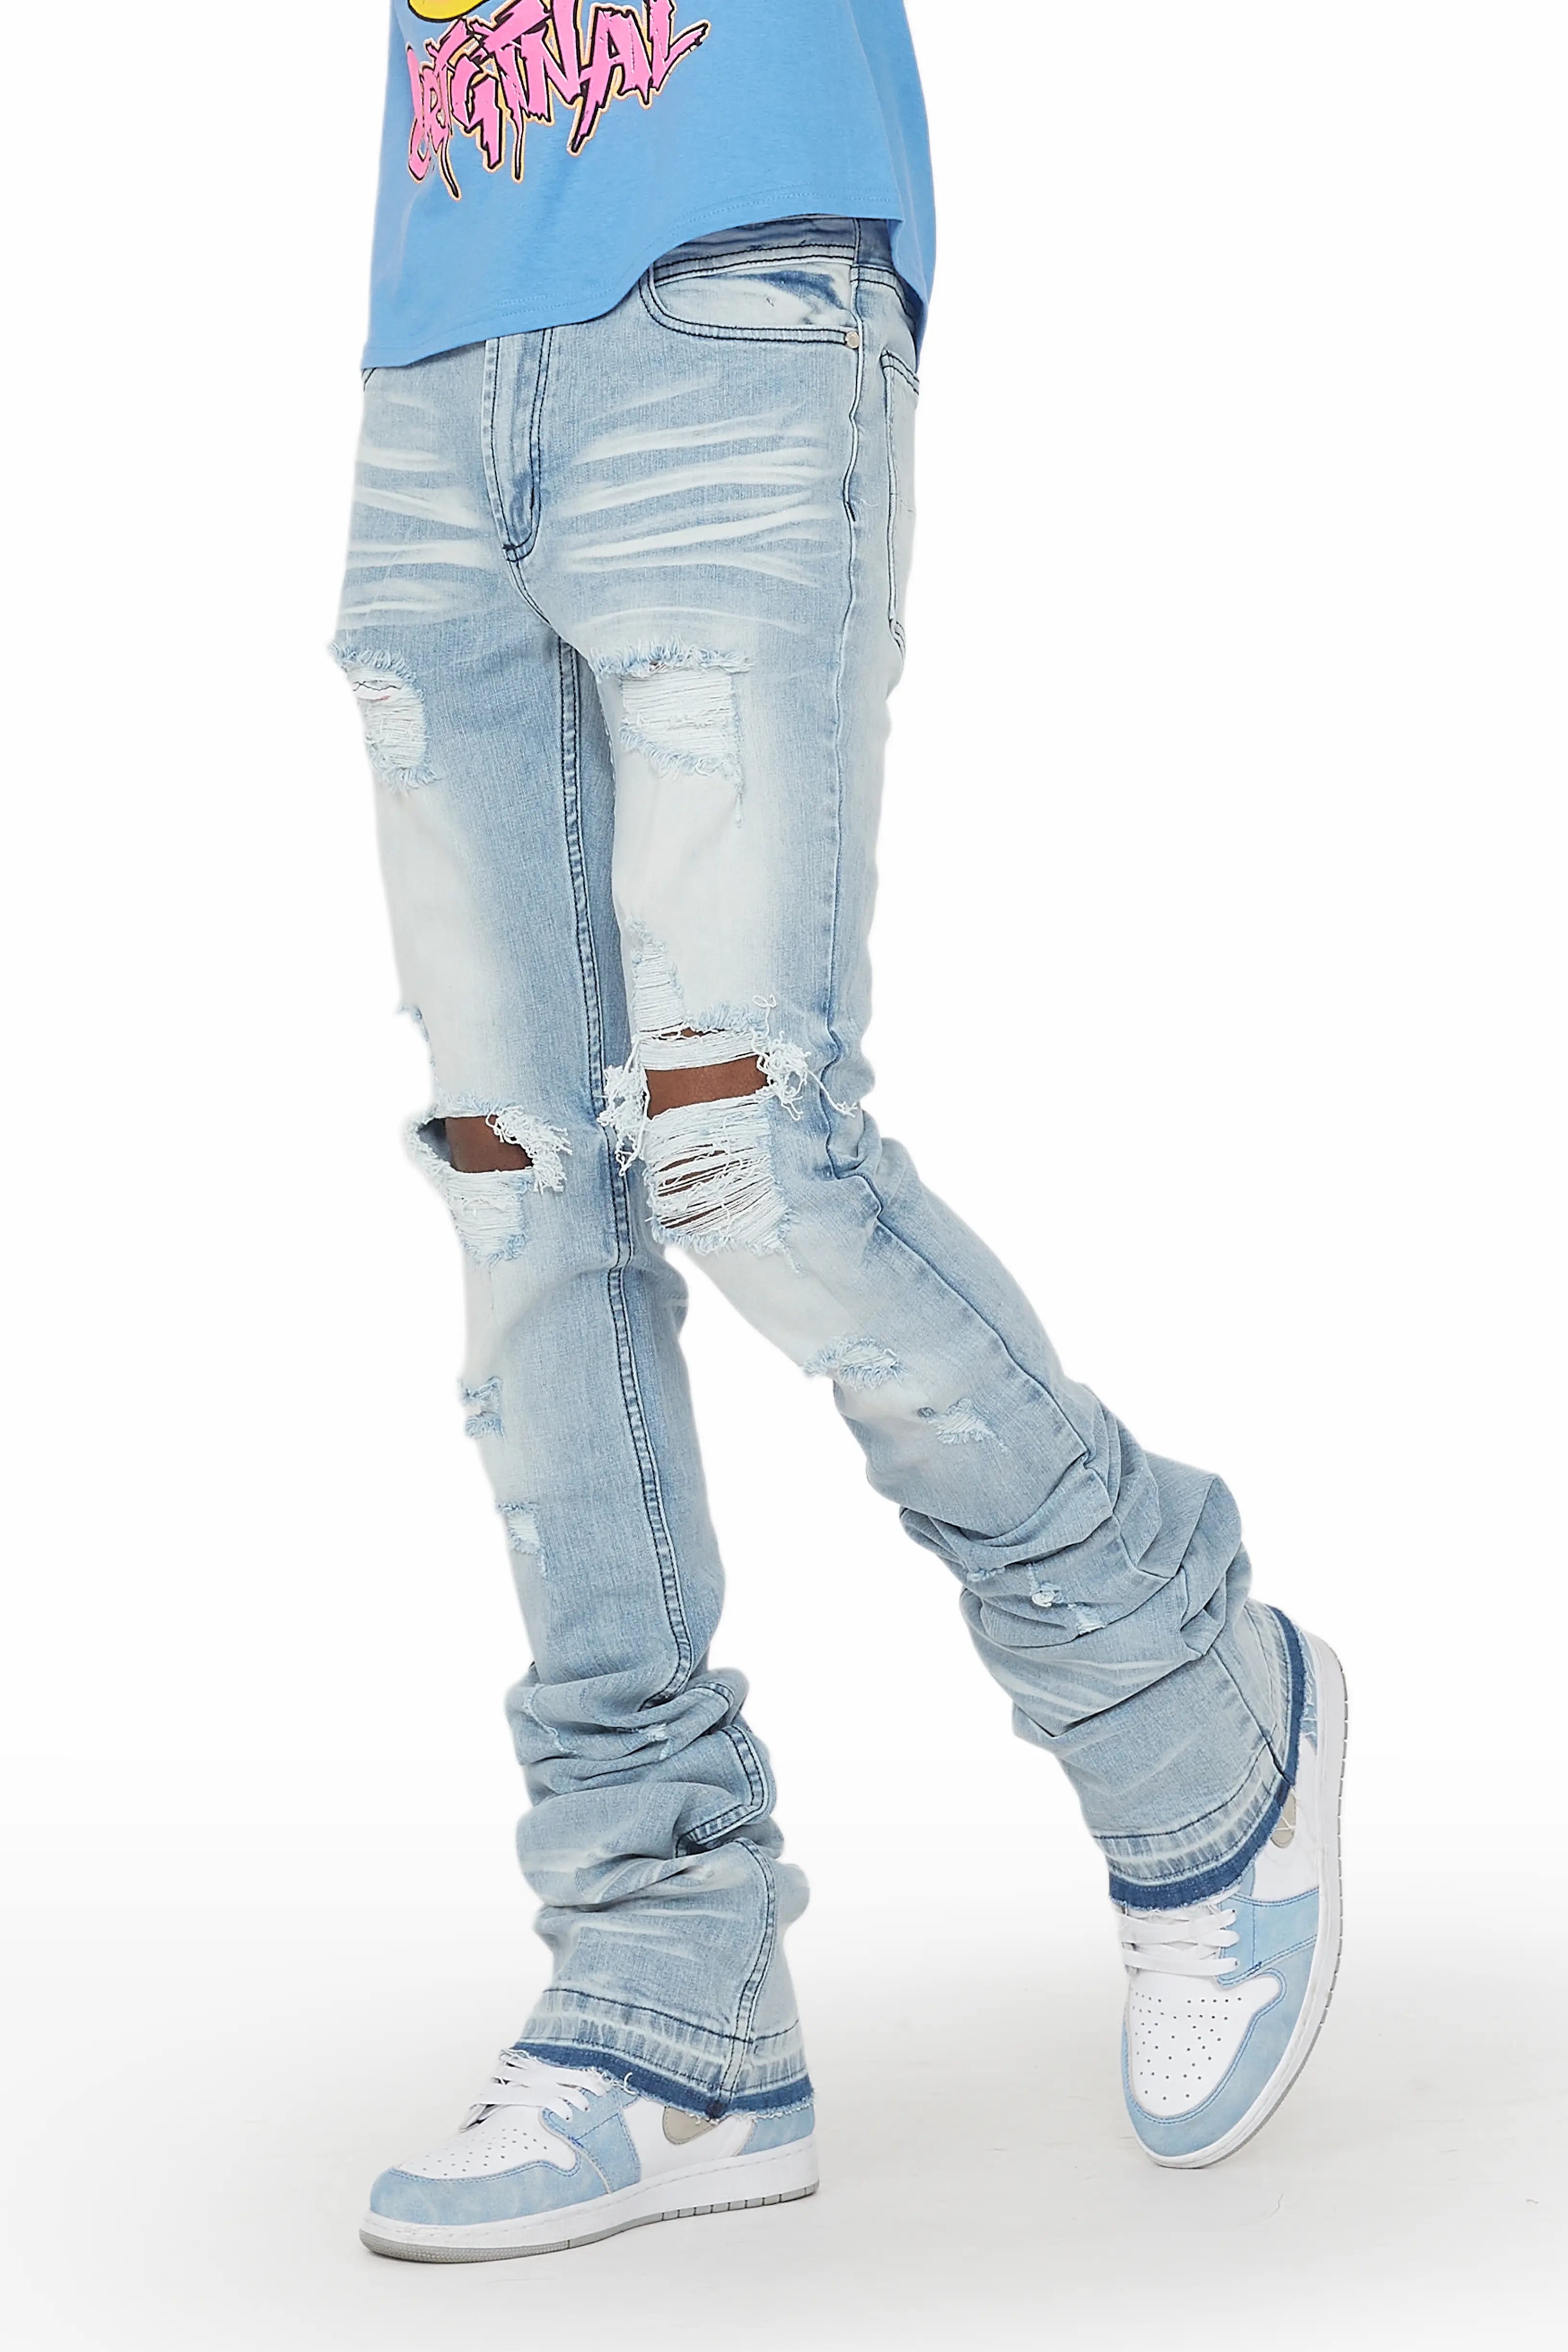 Men's Super Stacked Jeans– Rockstar Original